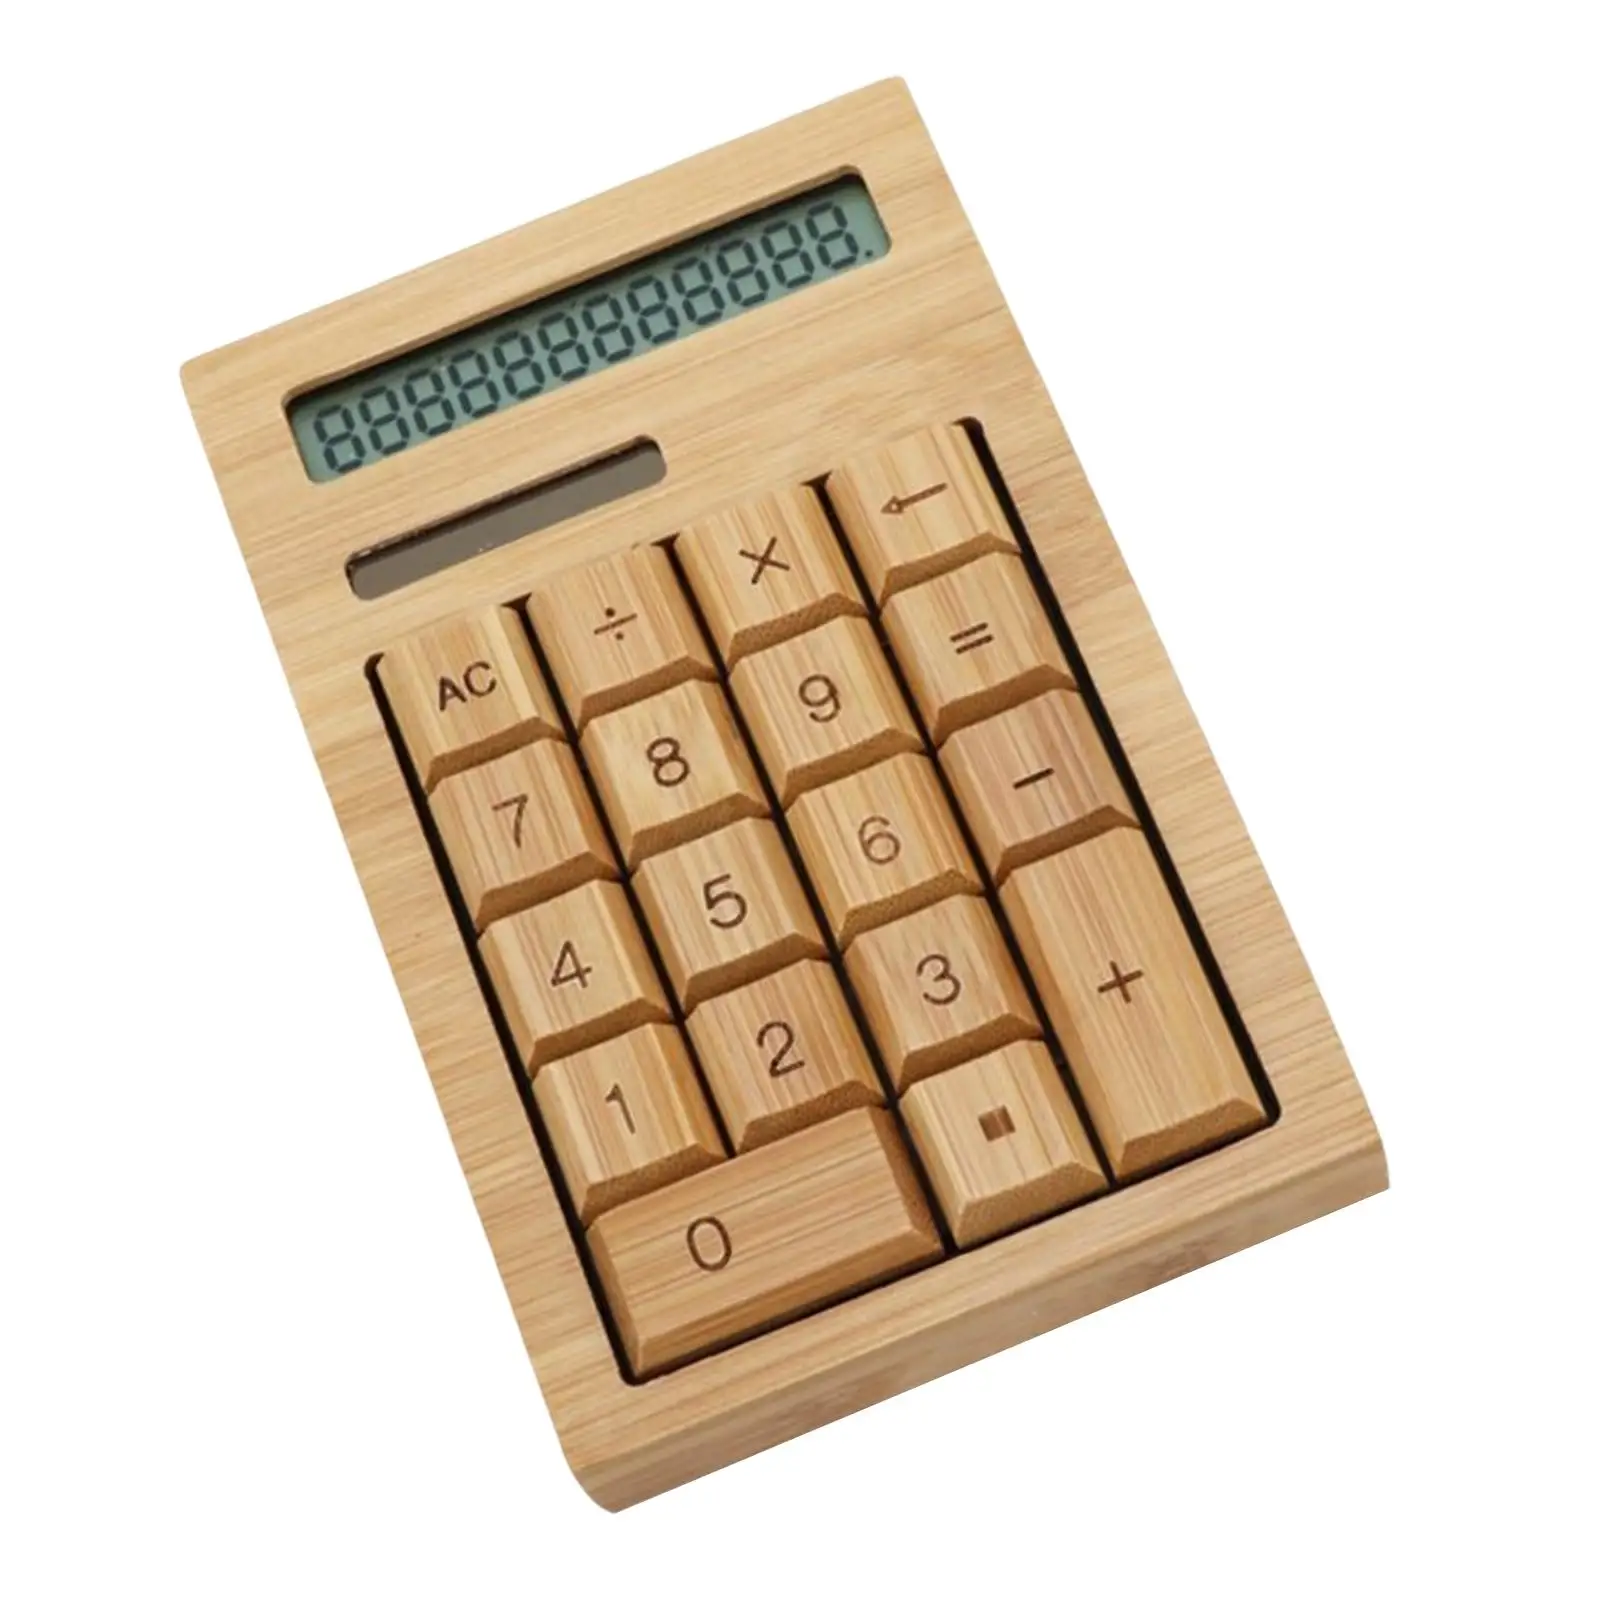 Bamboo Calculator Solar 12 digits Anti Static Desktop Calculator for Office